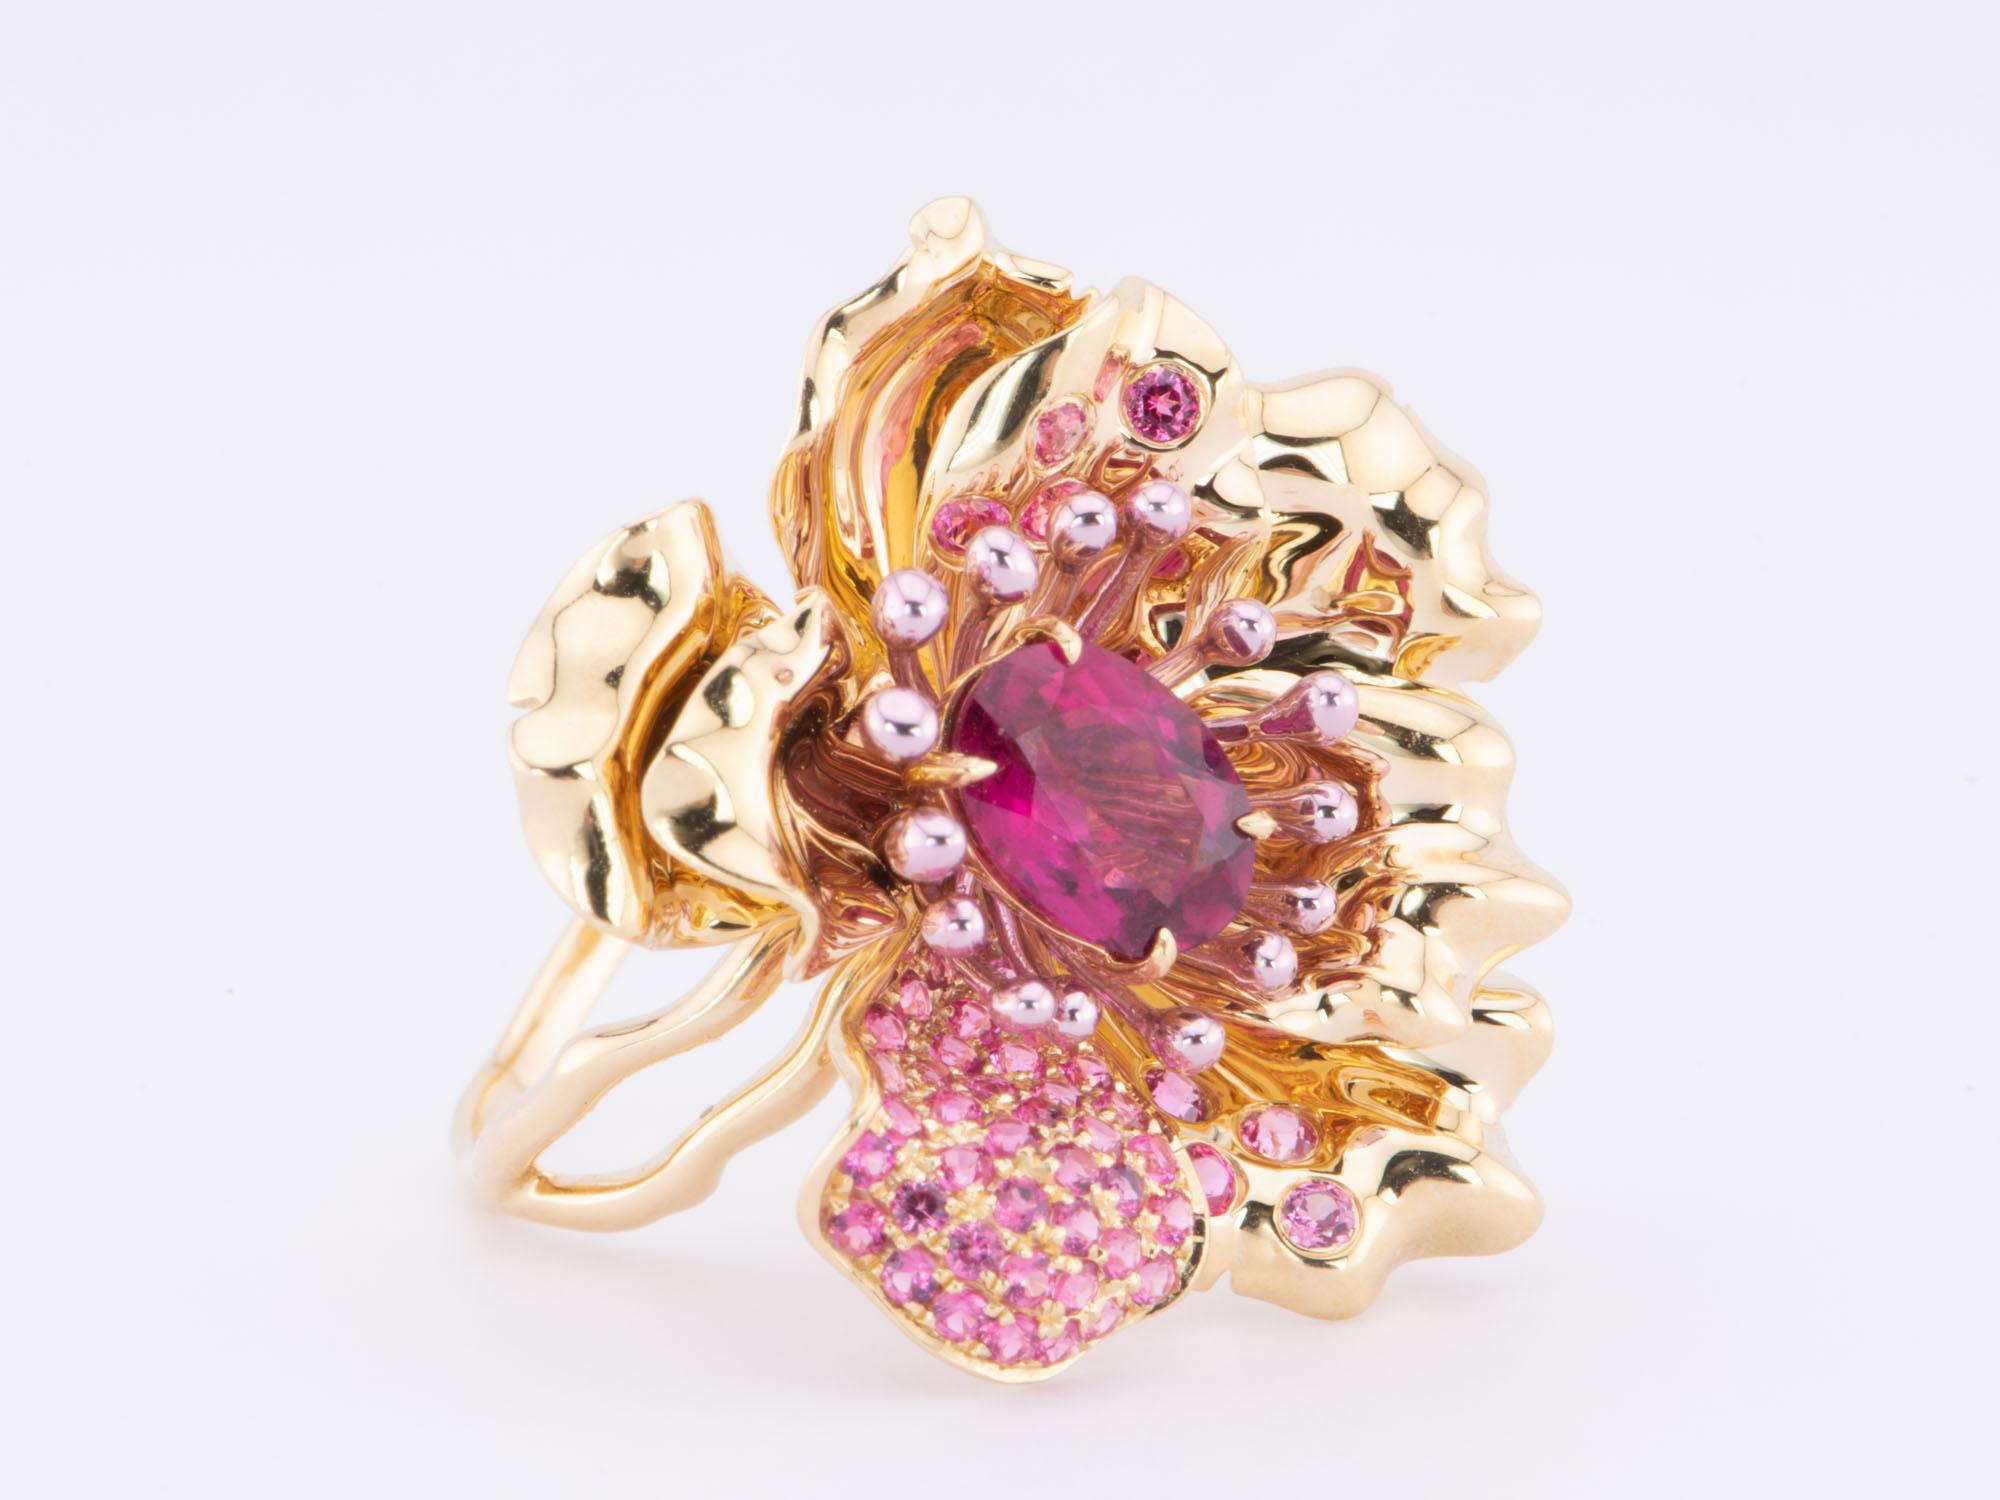 Art Jewelry Rubellite Tourmaline Center Flower Ring / Pendant 18K Gold R6641 For Sale 3